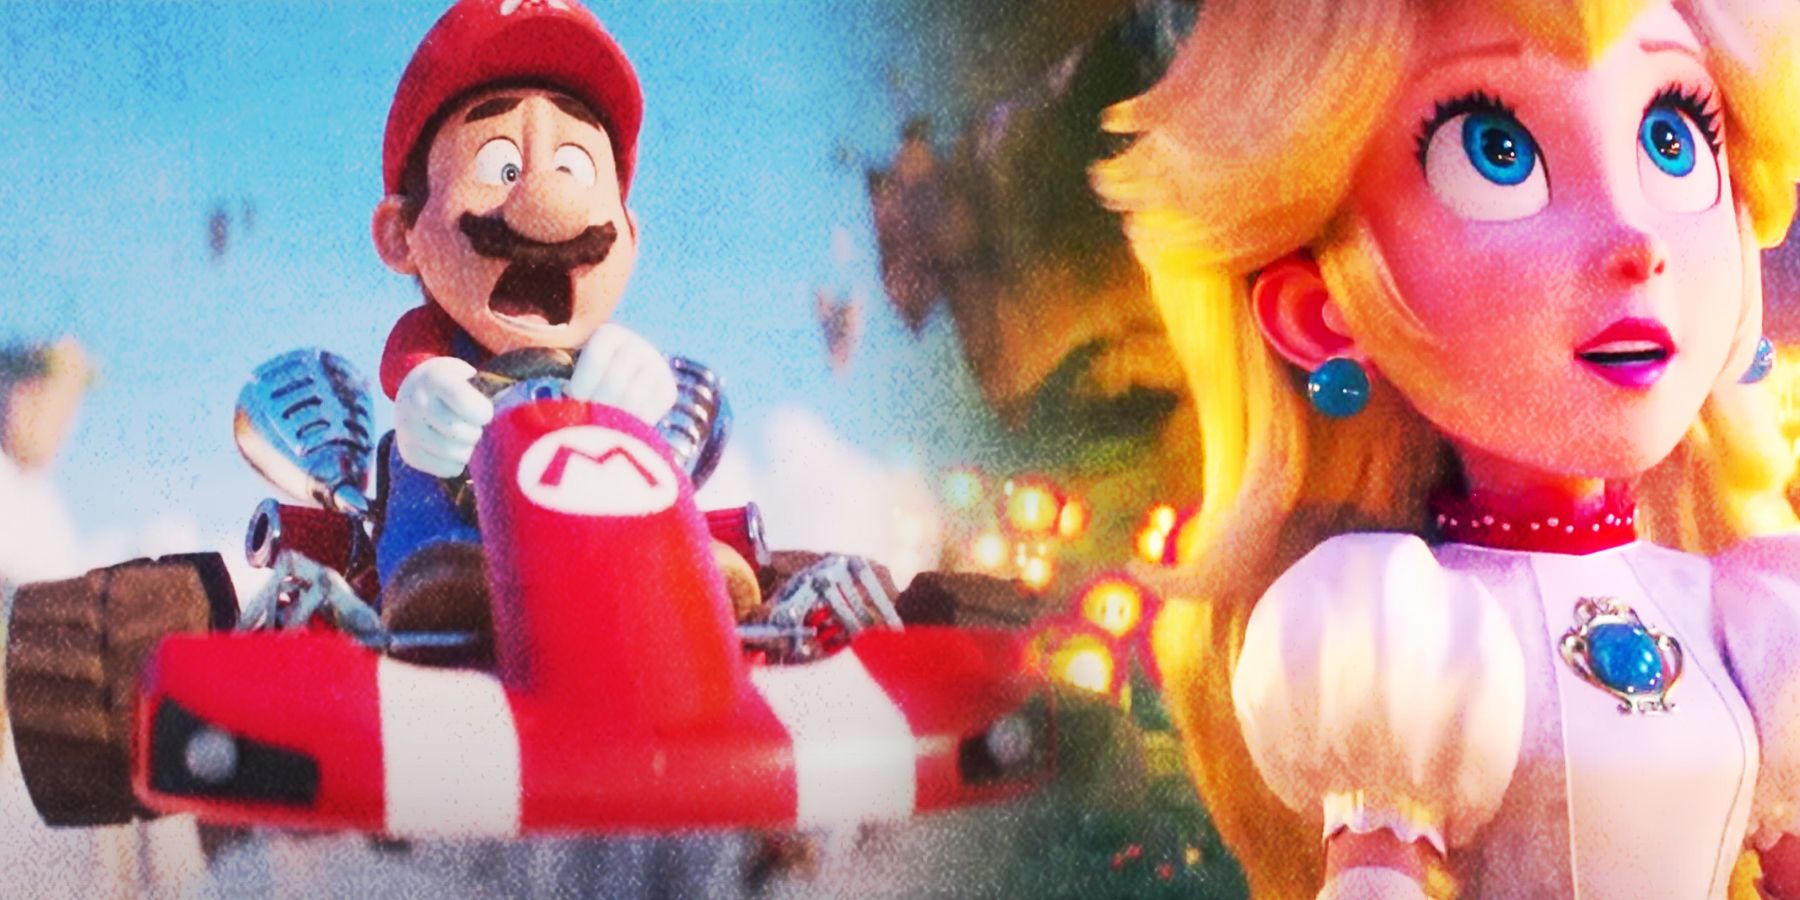 Mario and Peach in The Super Mario Bros. Movie trailer